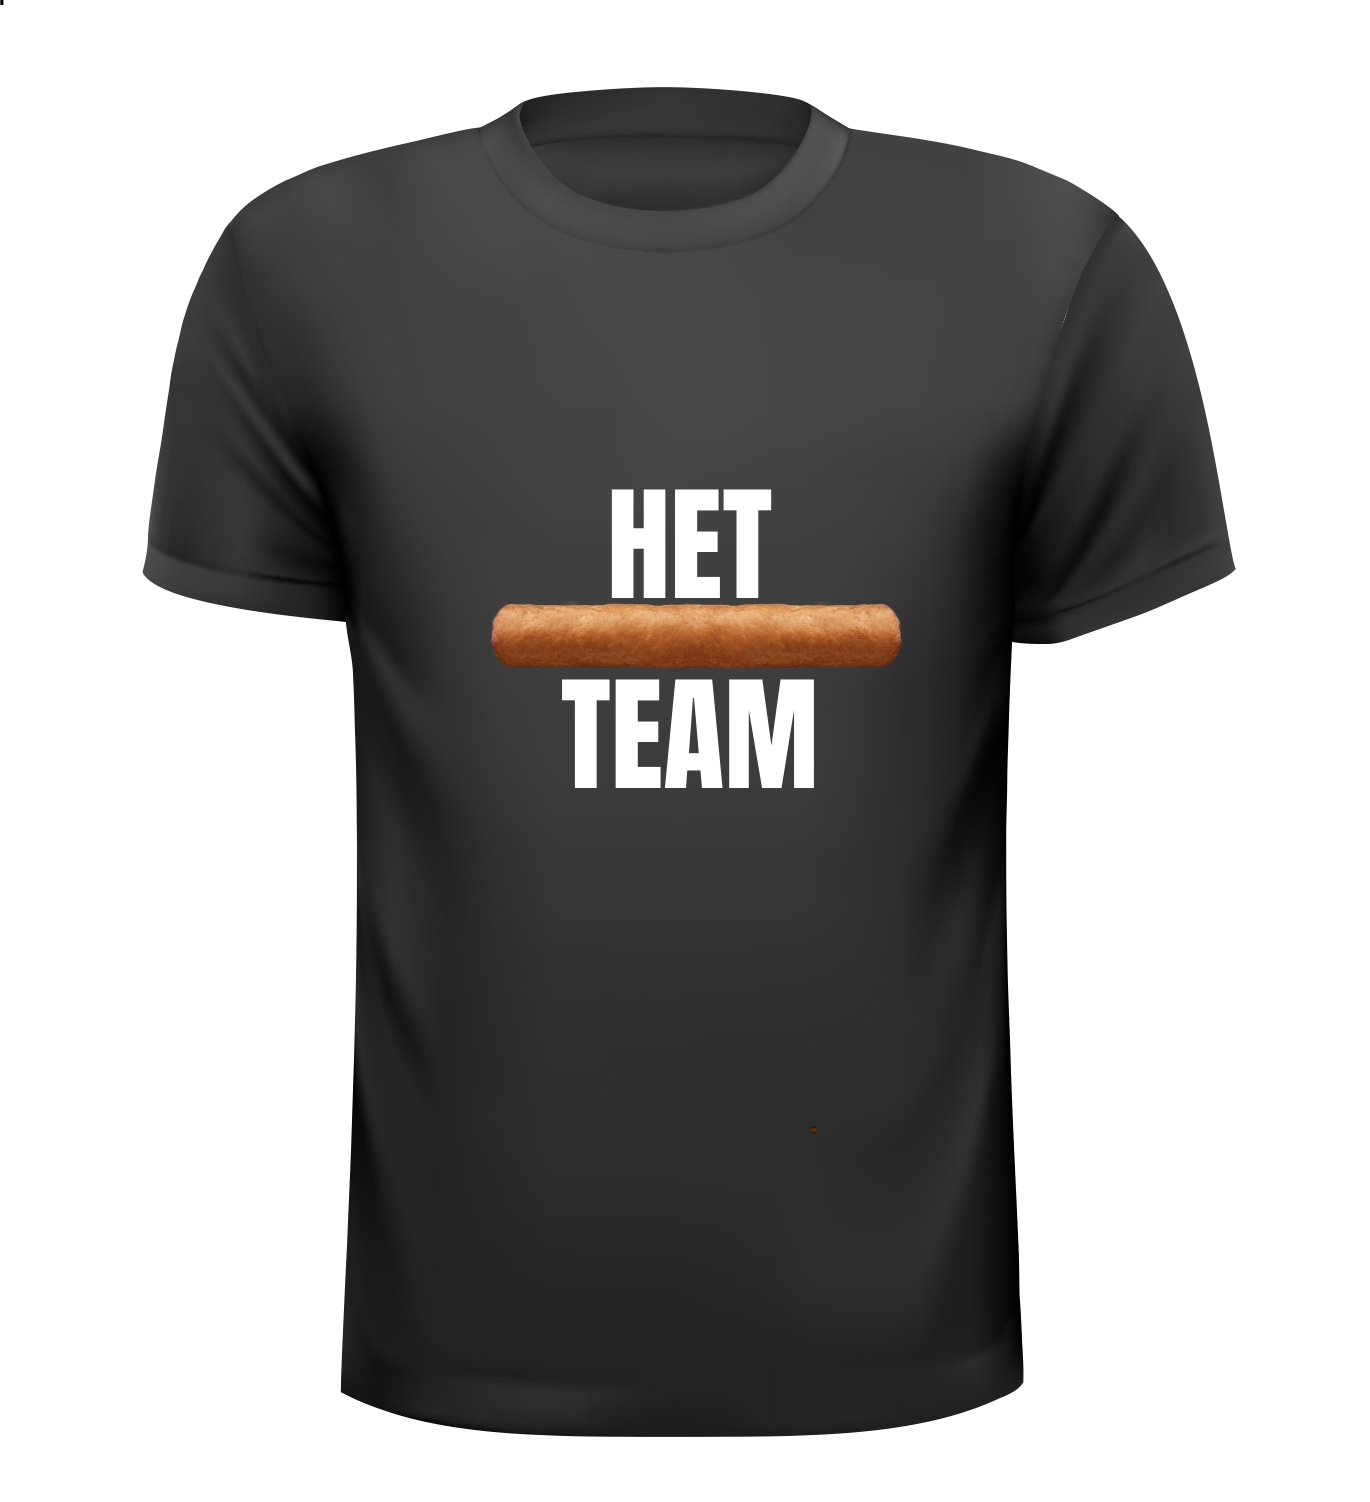 T-shirt het frikandellen team grappig humor